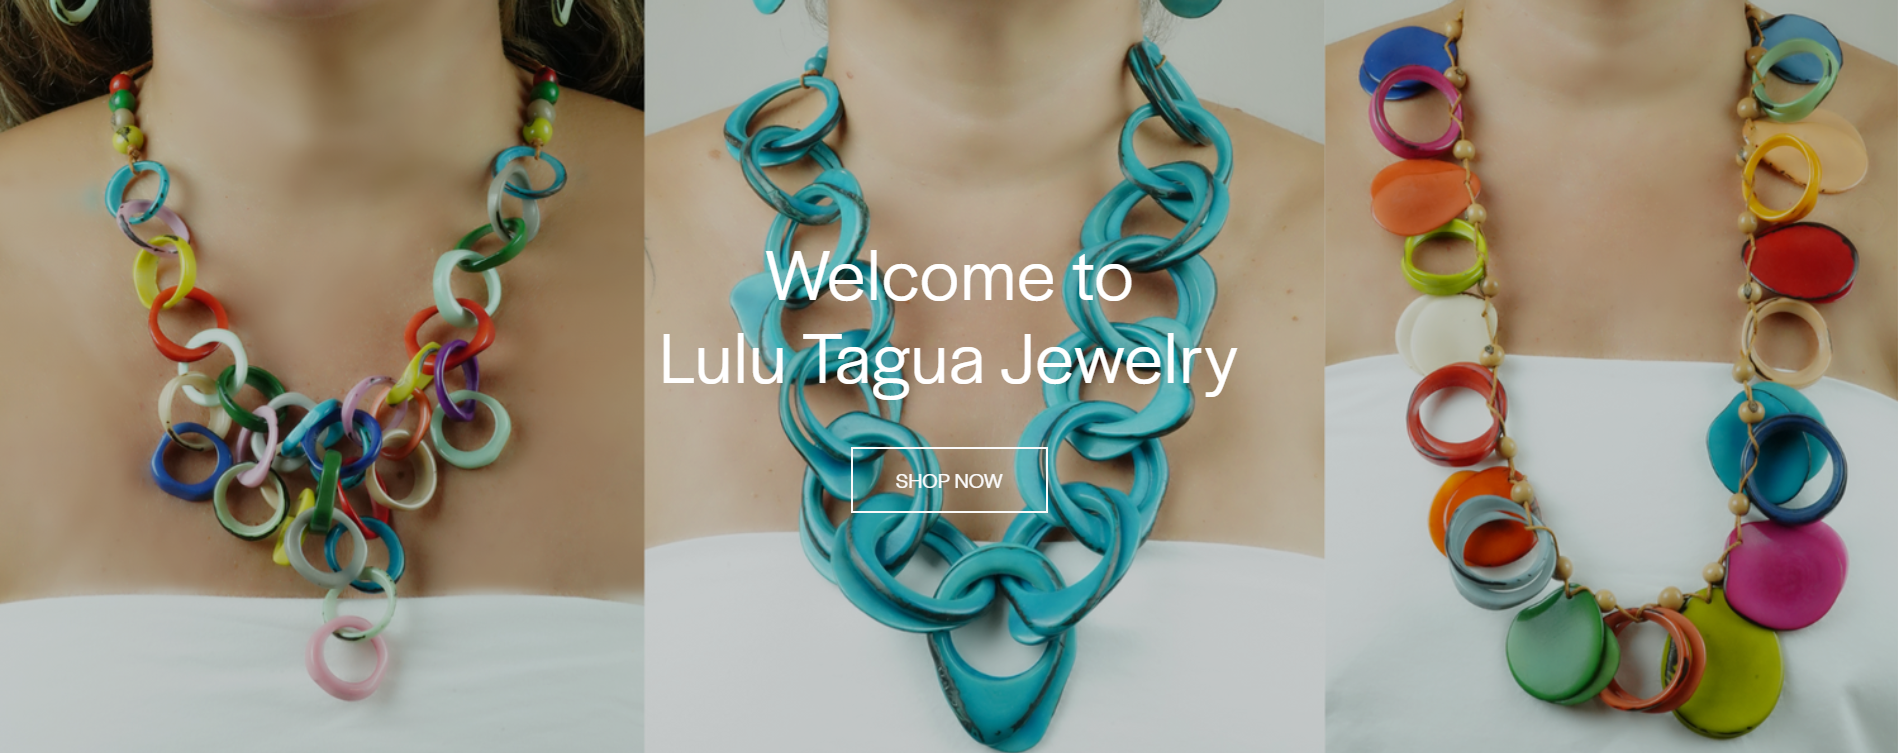 Store 1 — Lulu Tagua Jewelry